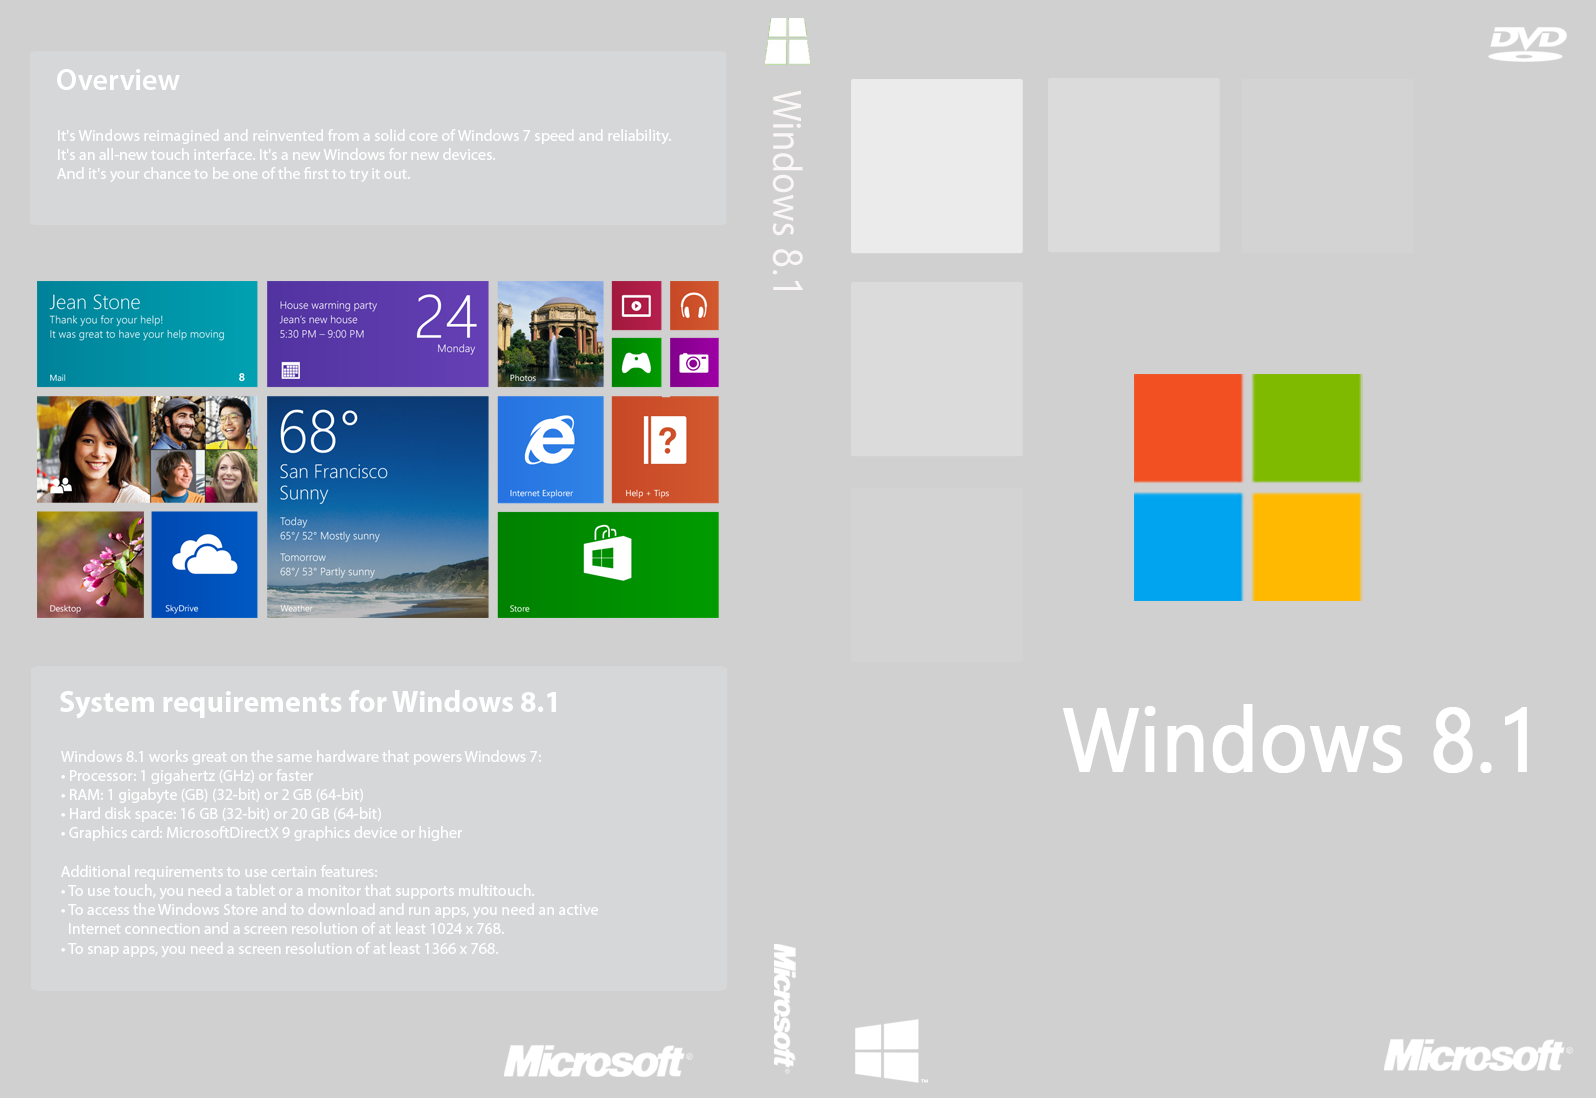 Buy Software: Microsoft Windows 8.1 Enterprise PC